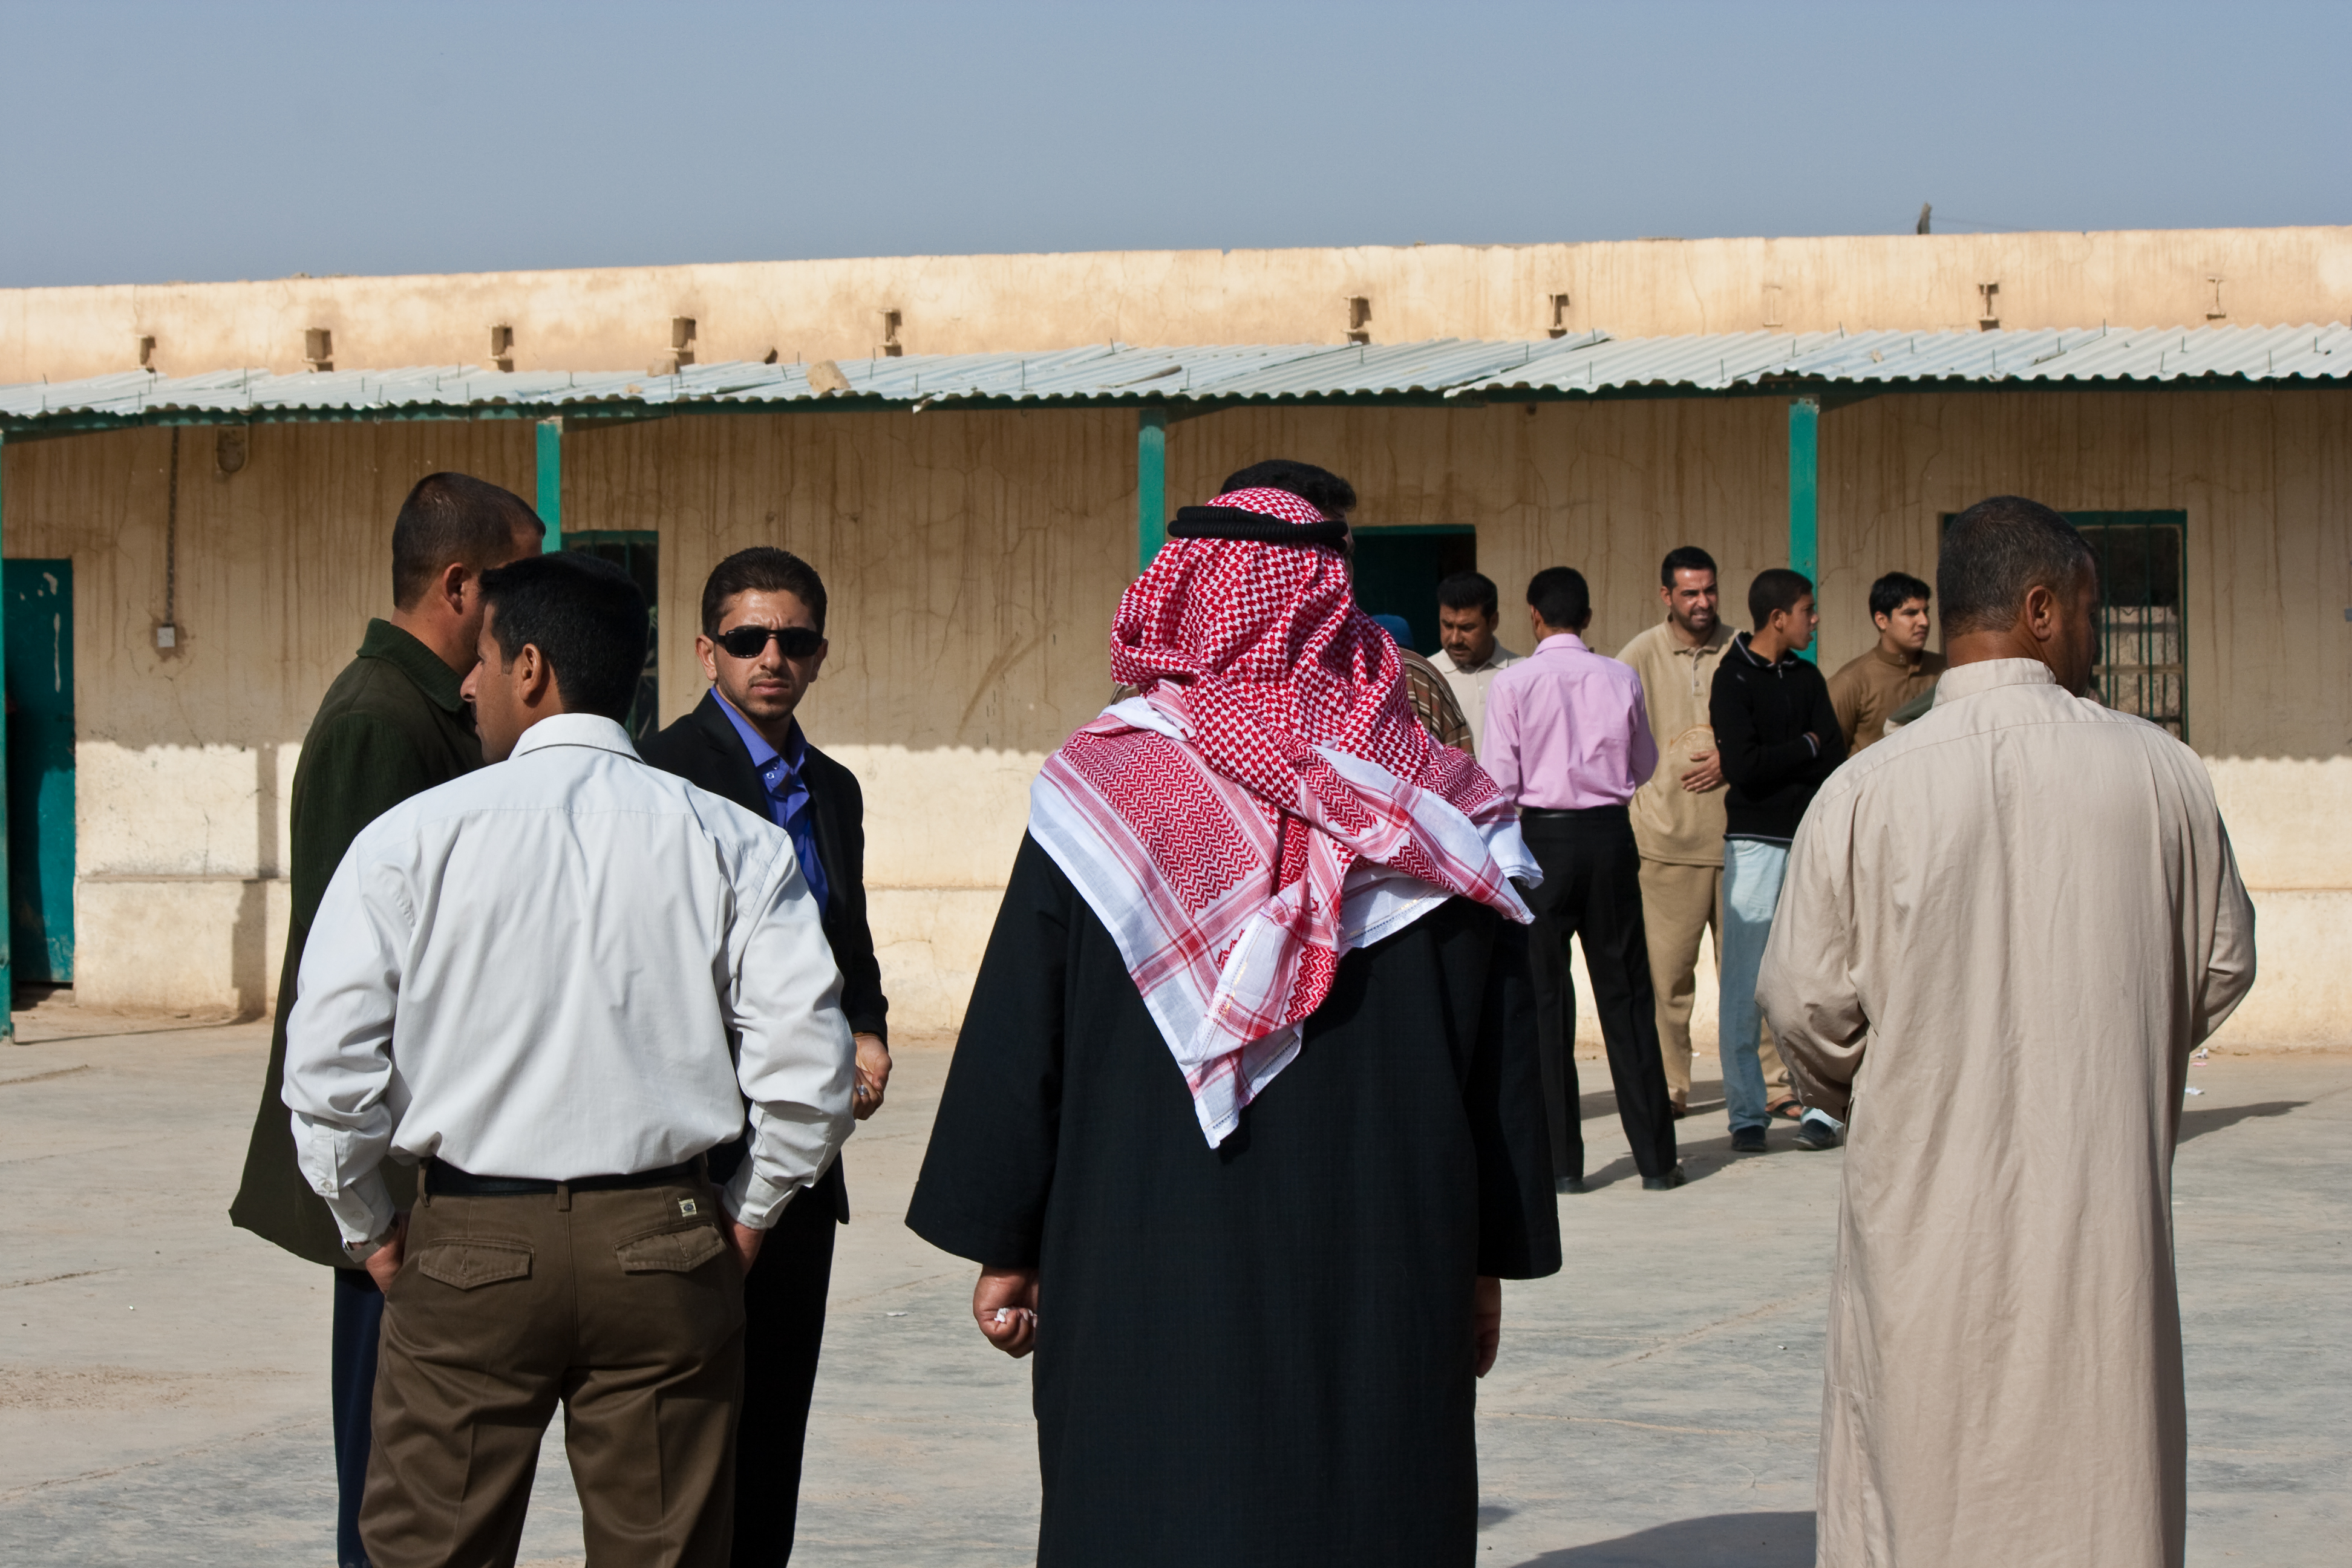 RAMADI, Gathering outside - Flickr - Al Jazeera English